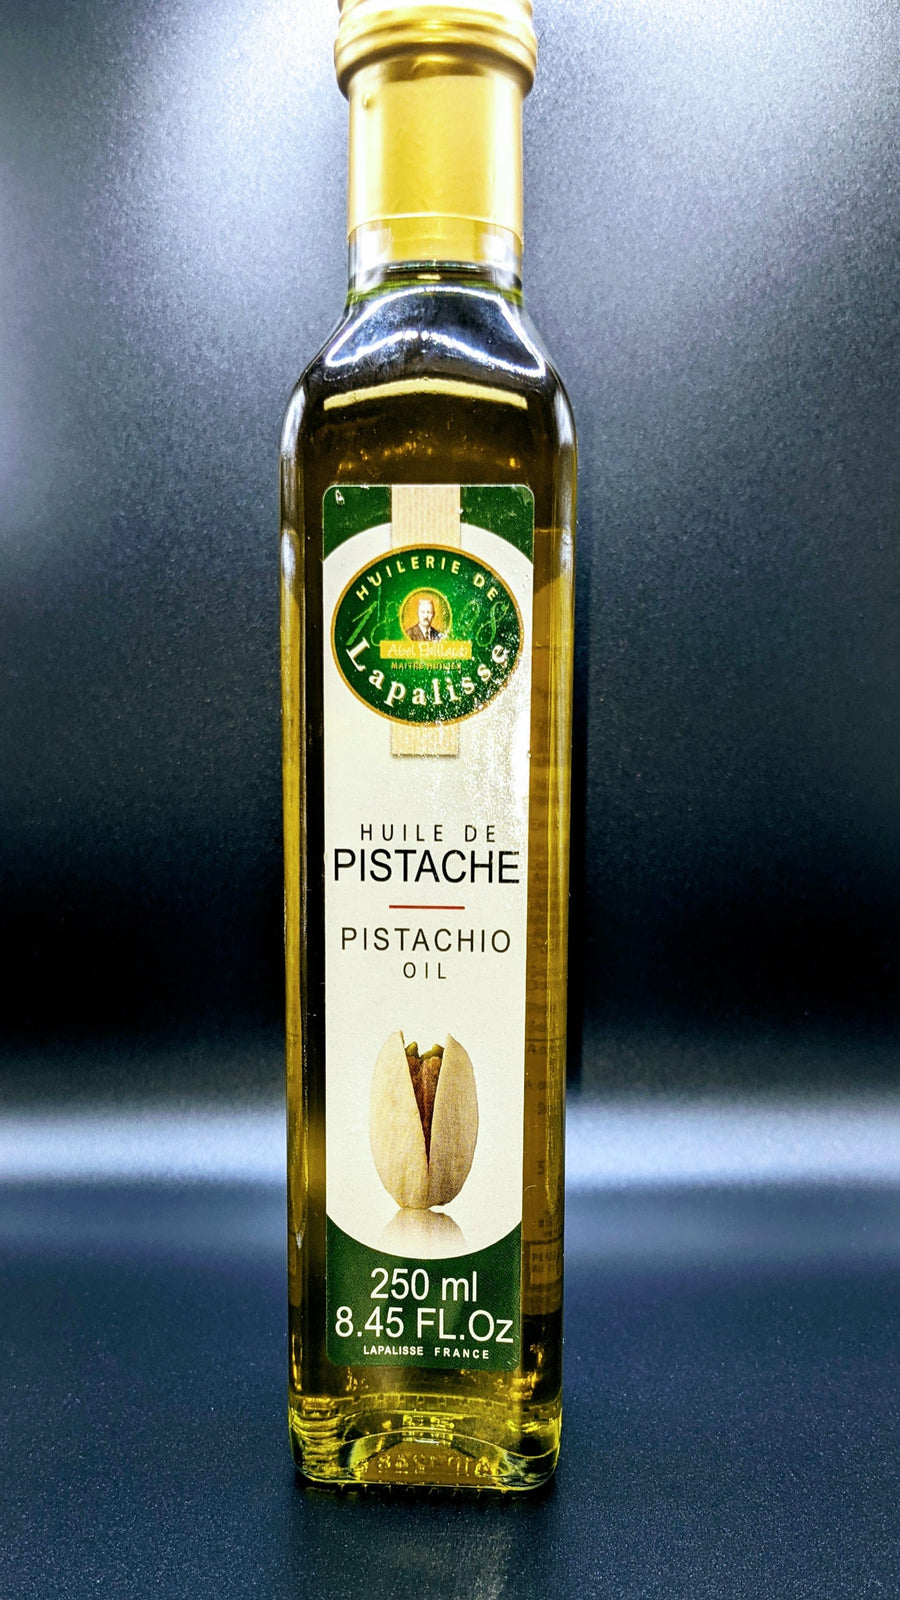 Lapalisse Pistachio Oil Lapalisse Pistachio Oil France